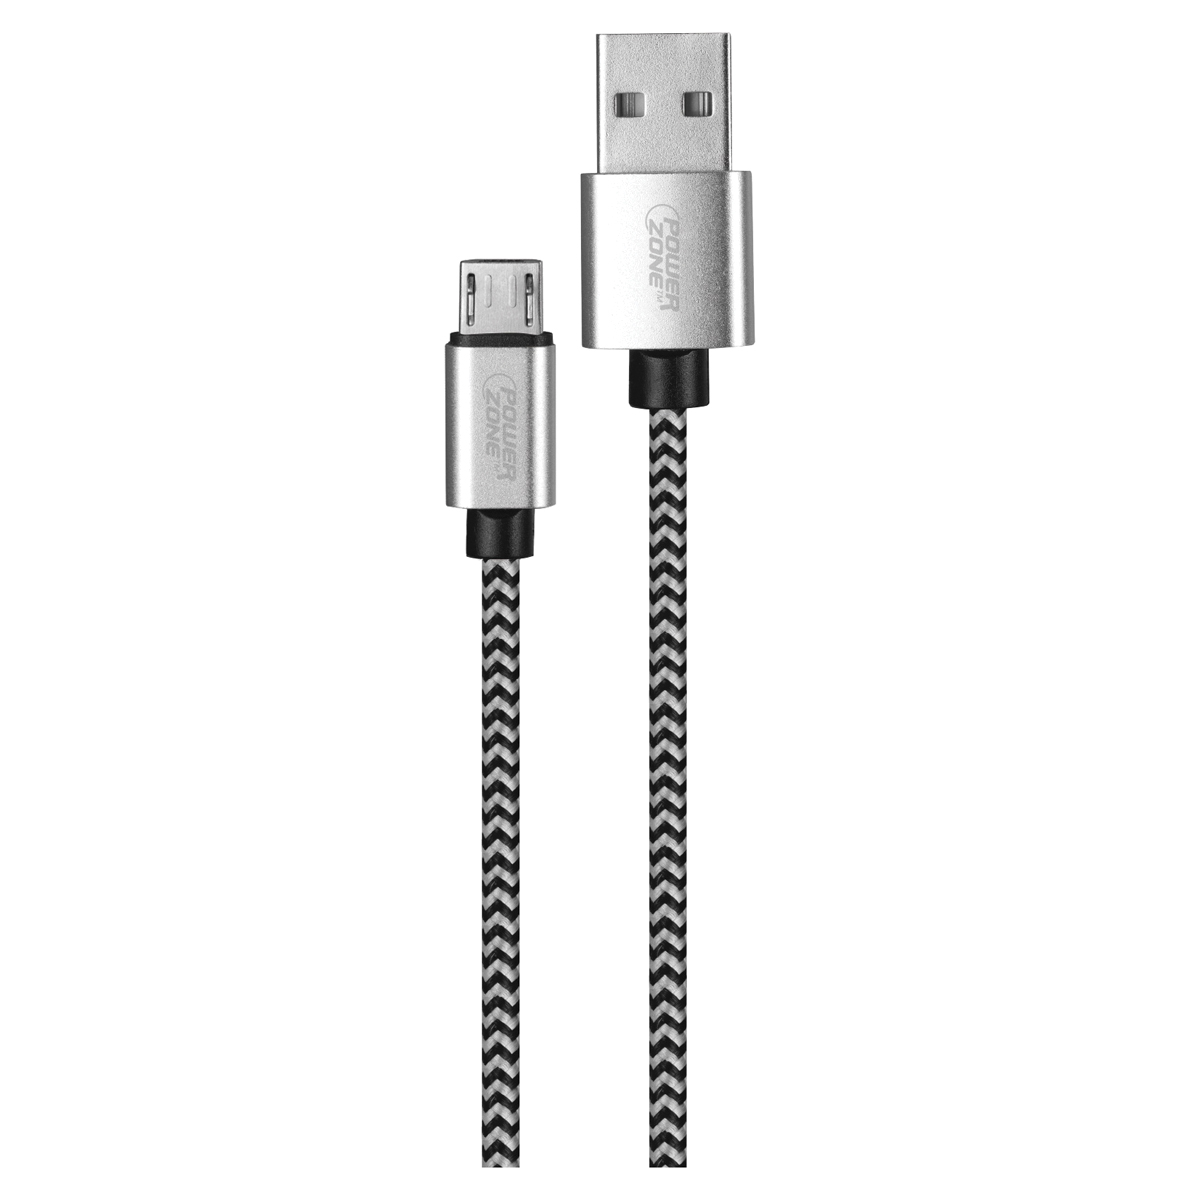 KL-029X-2M-MICRO Micro Charging Cable, Micro USB, USB, Black/White Sheath, 6 ft L